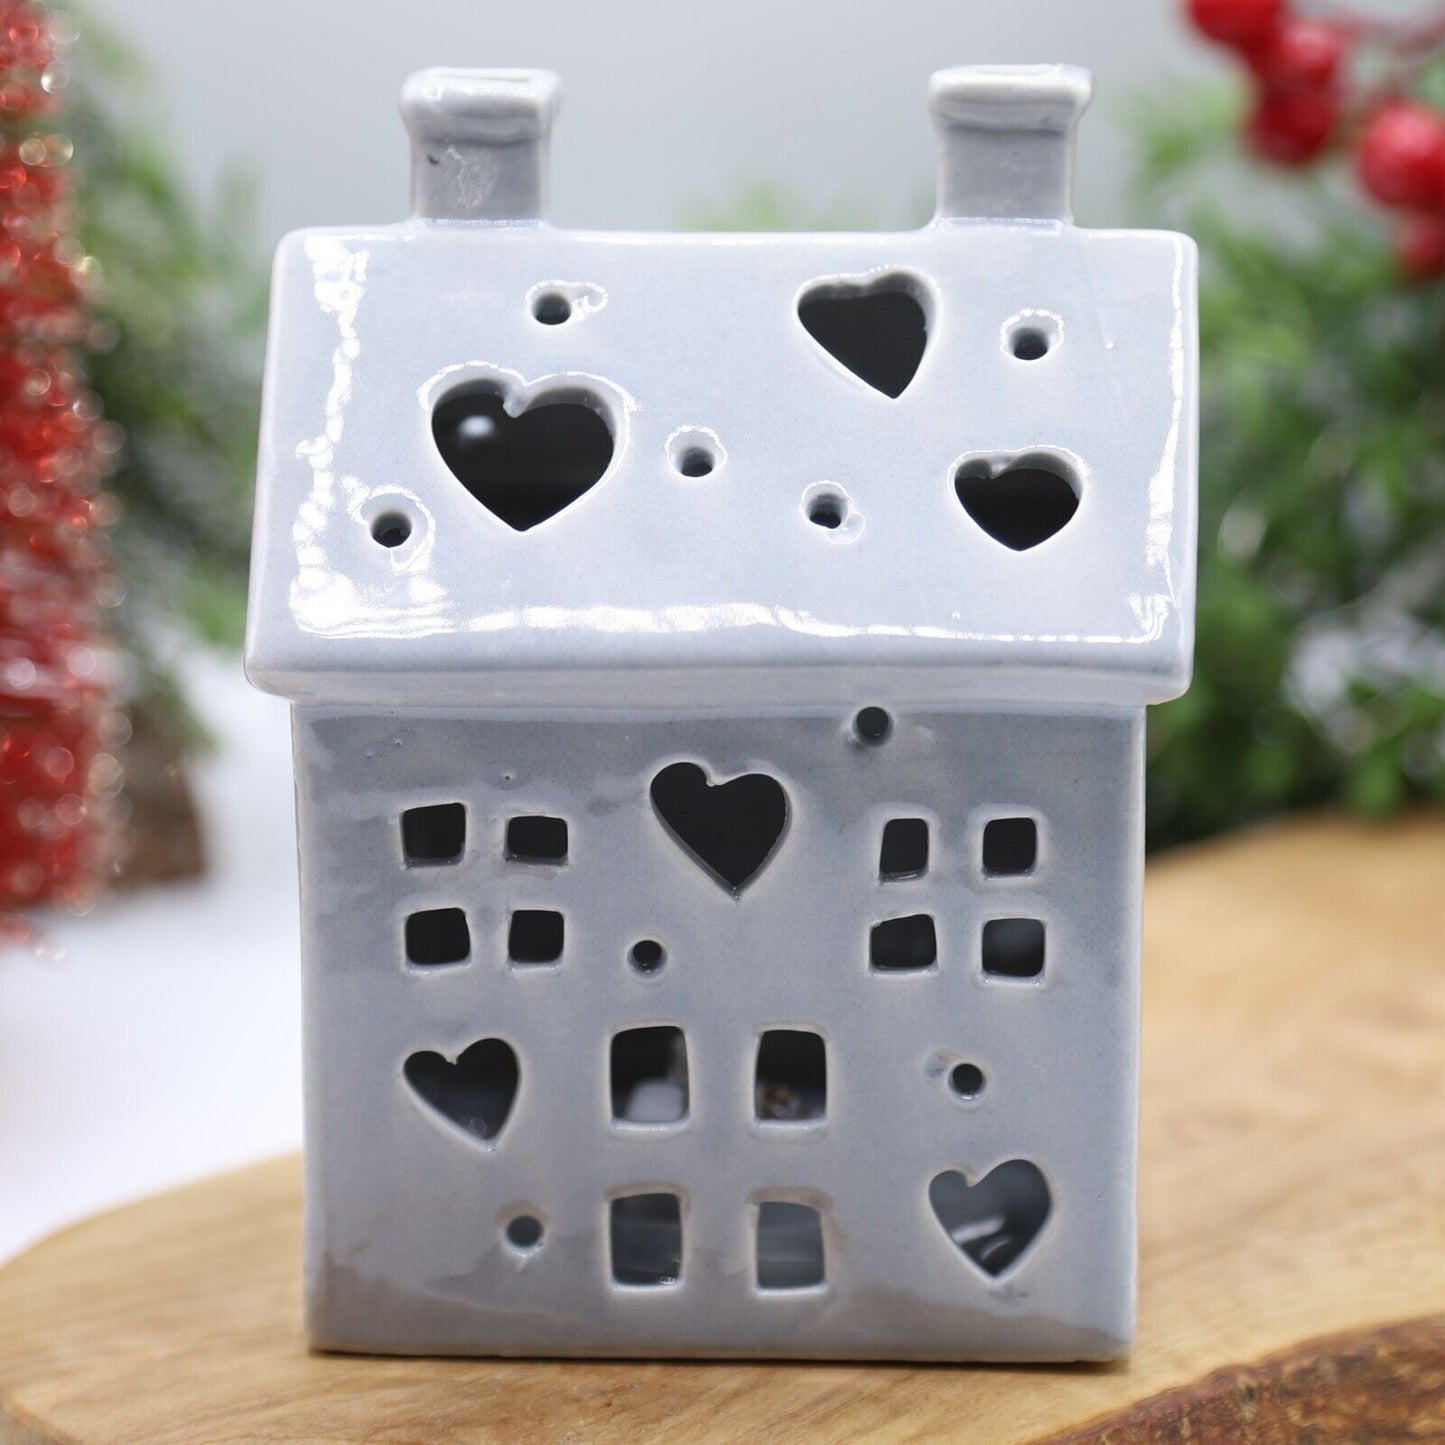 LED Grey Ceramic Home With Small Battery House Xmas Christmas Decor Ornament